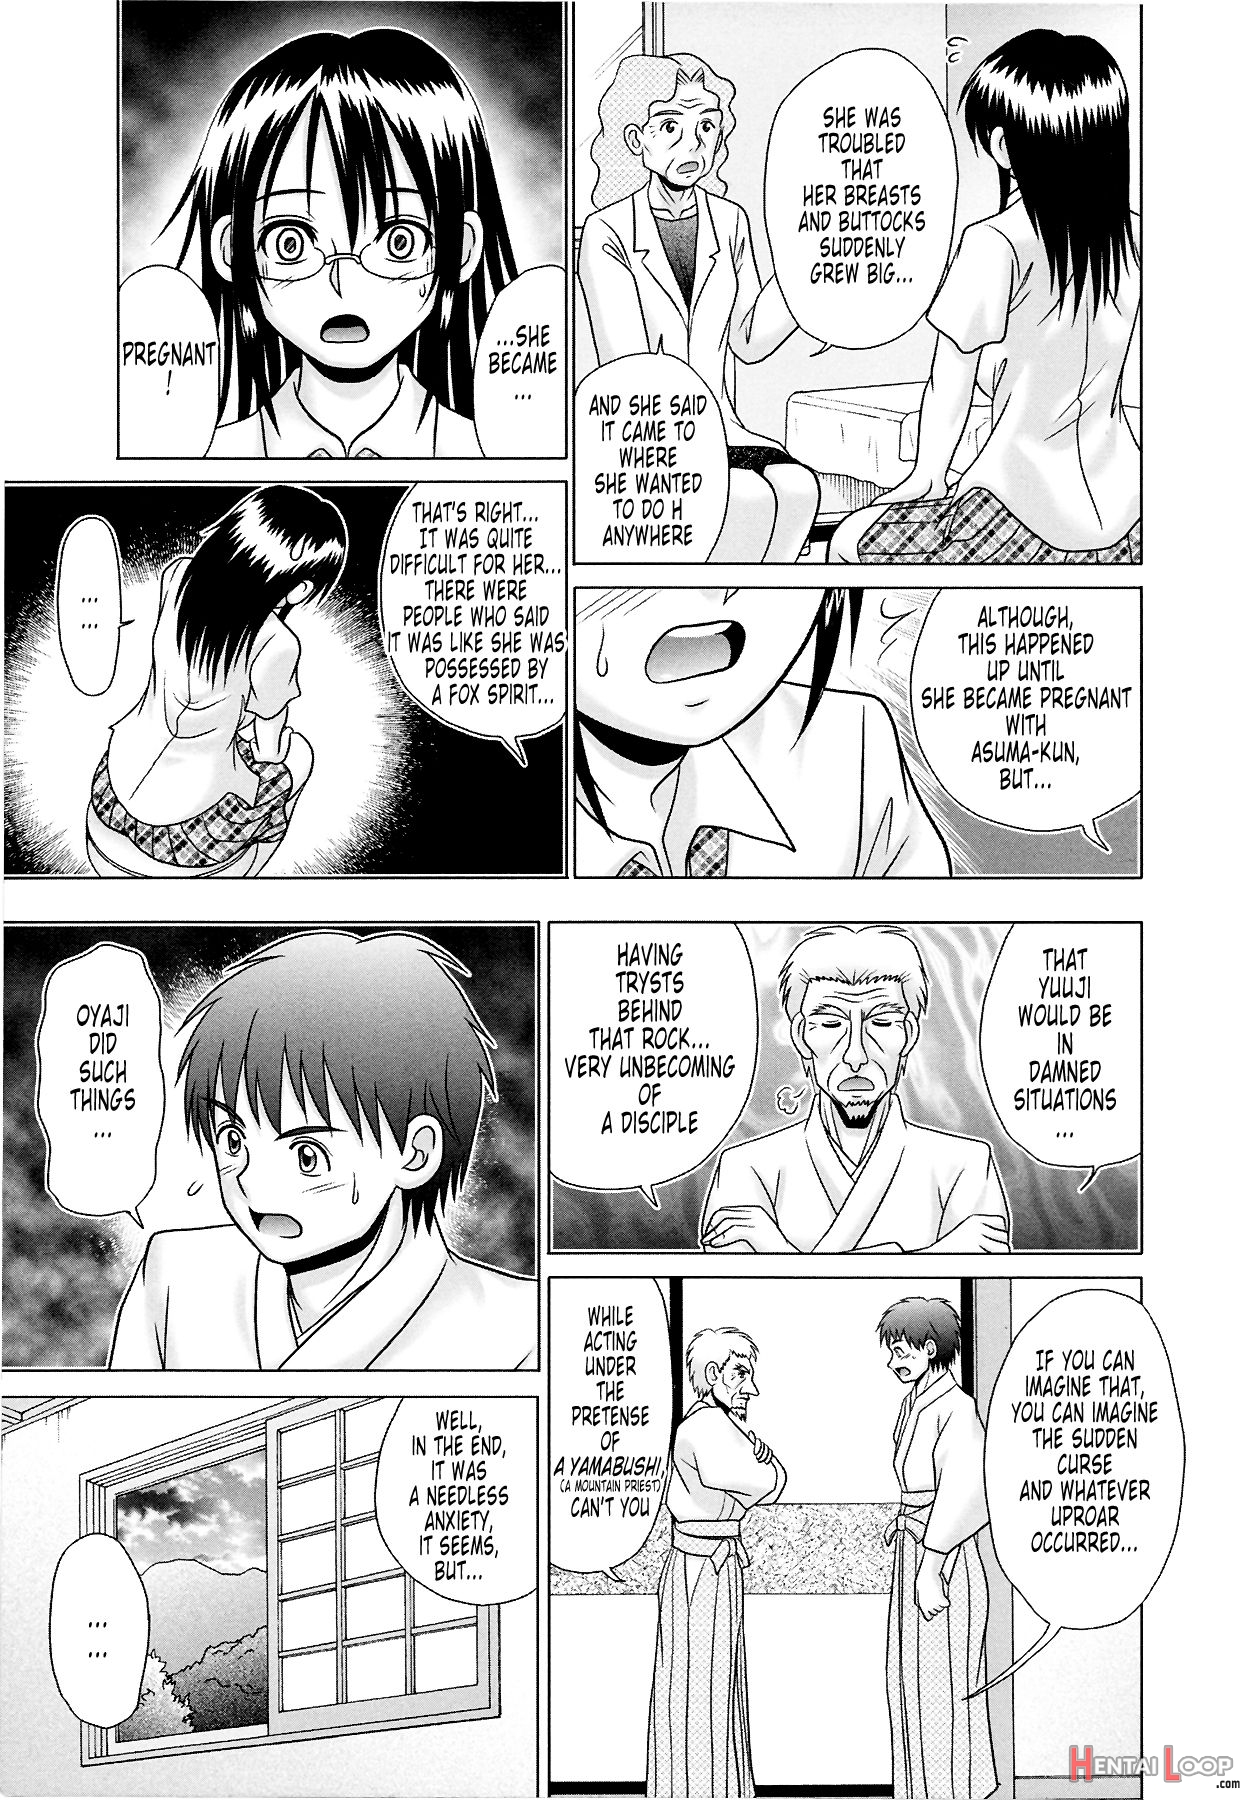 Tsukumimi 1&2 page 297